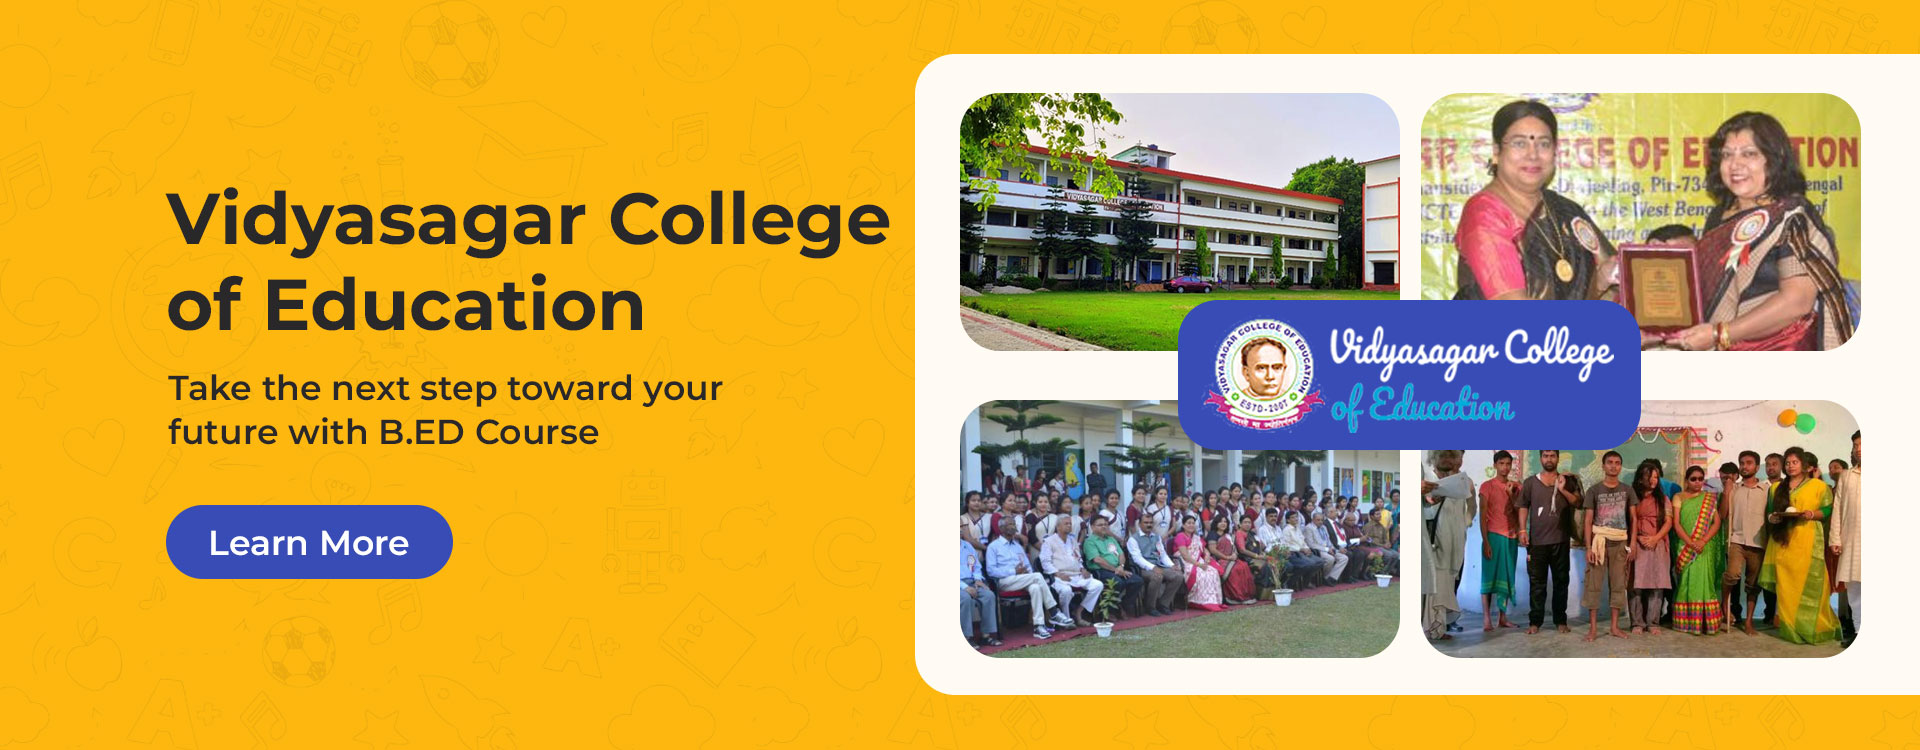 Vidyasagar College of Education 